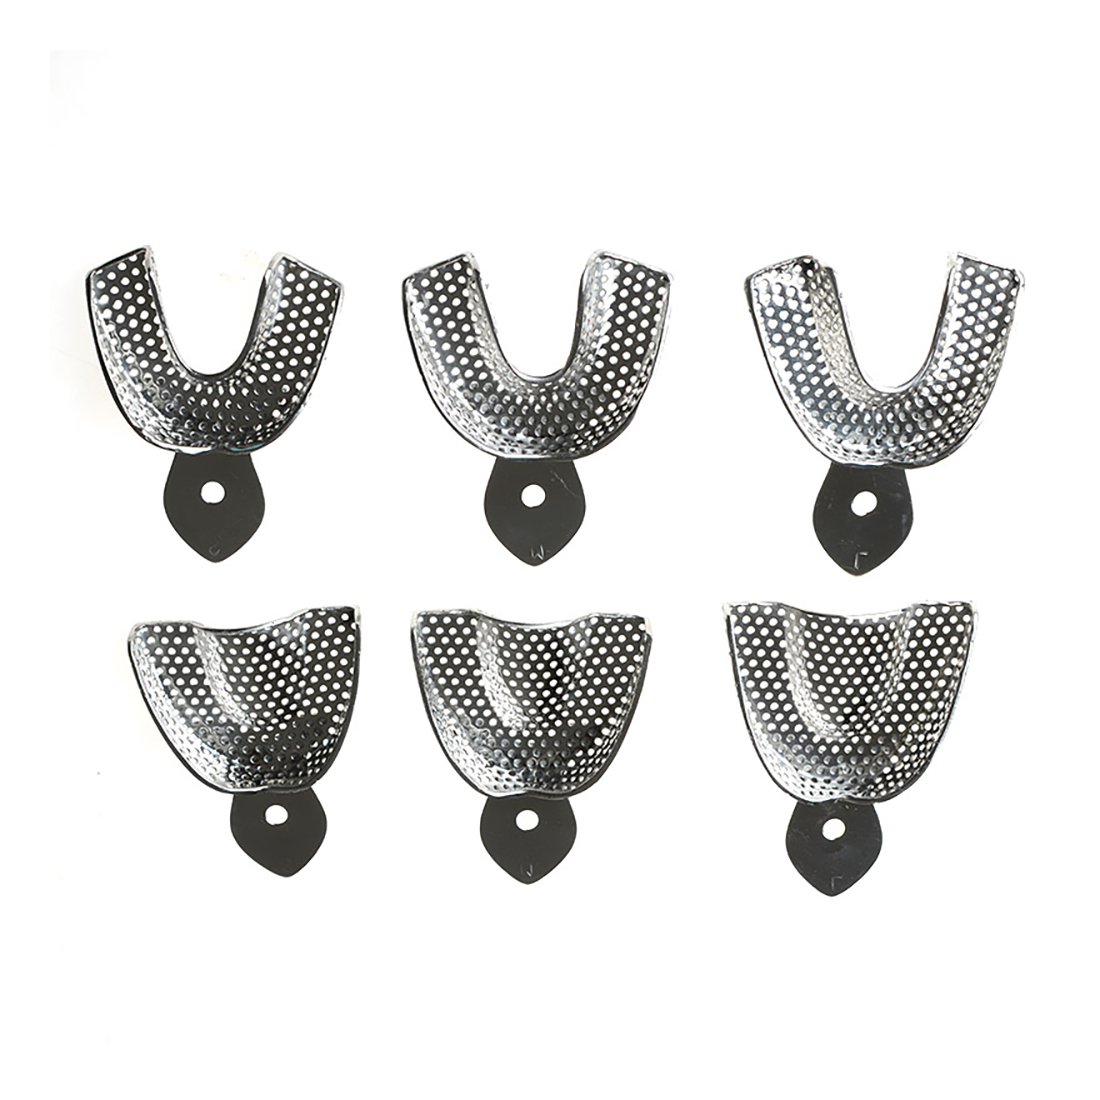 Dental Impression Tray Stainless Steel Denture Trays 3 Types 6pcs/Kit - pairaydental.com